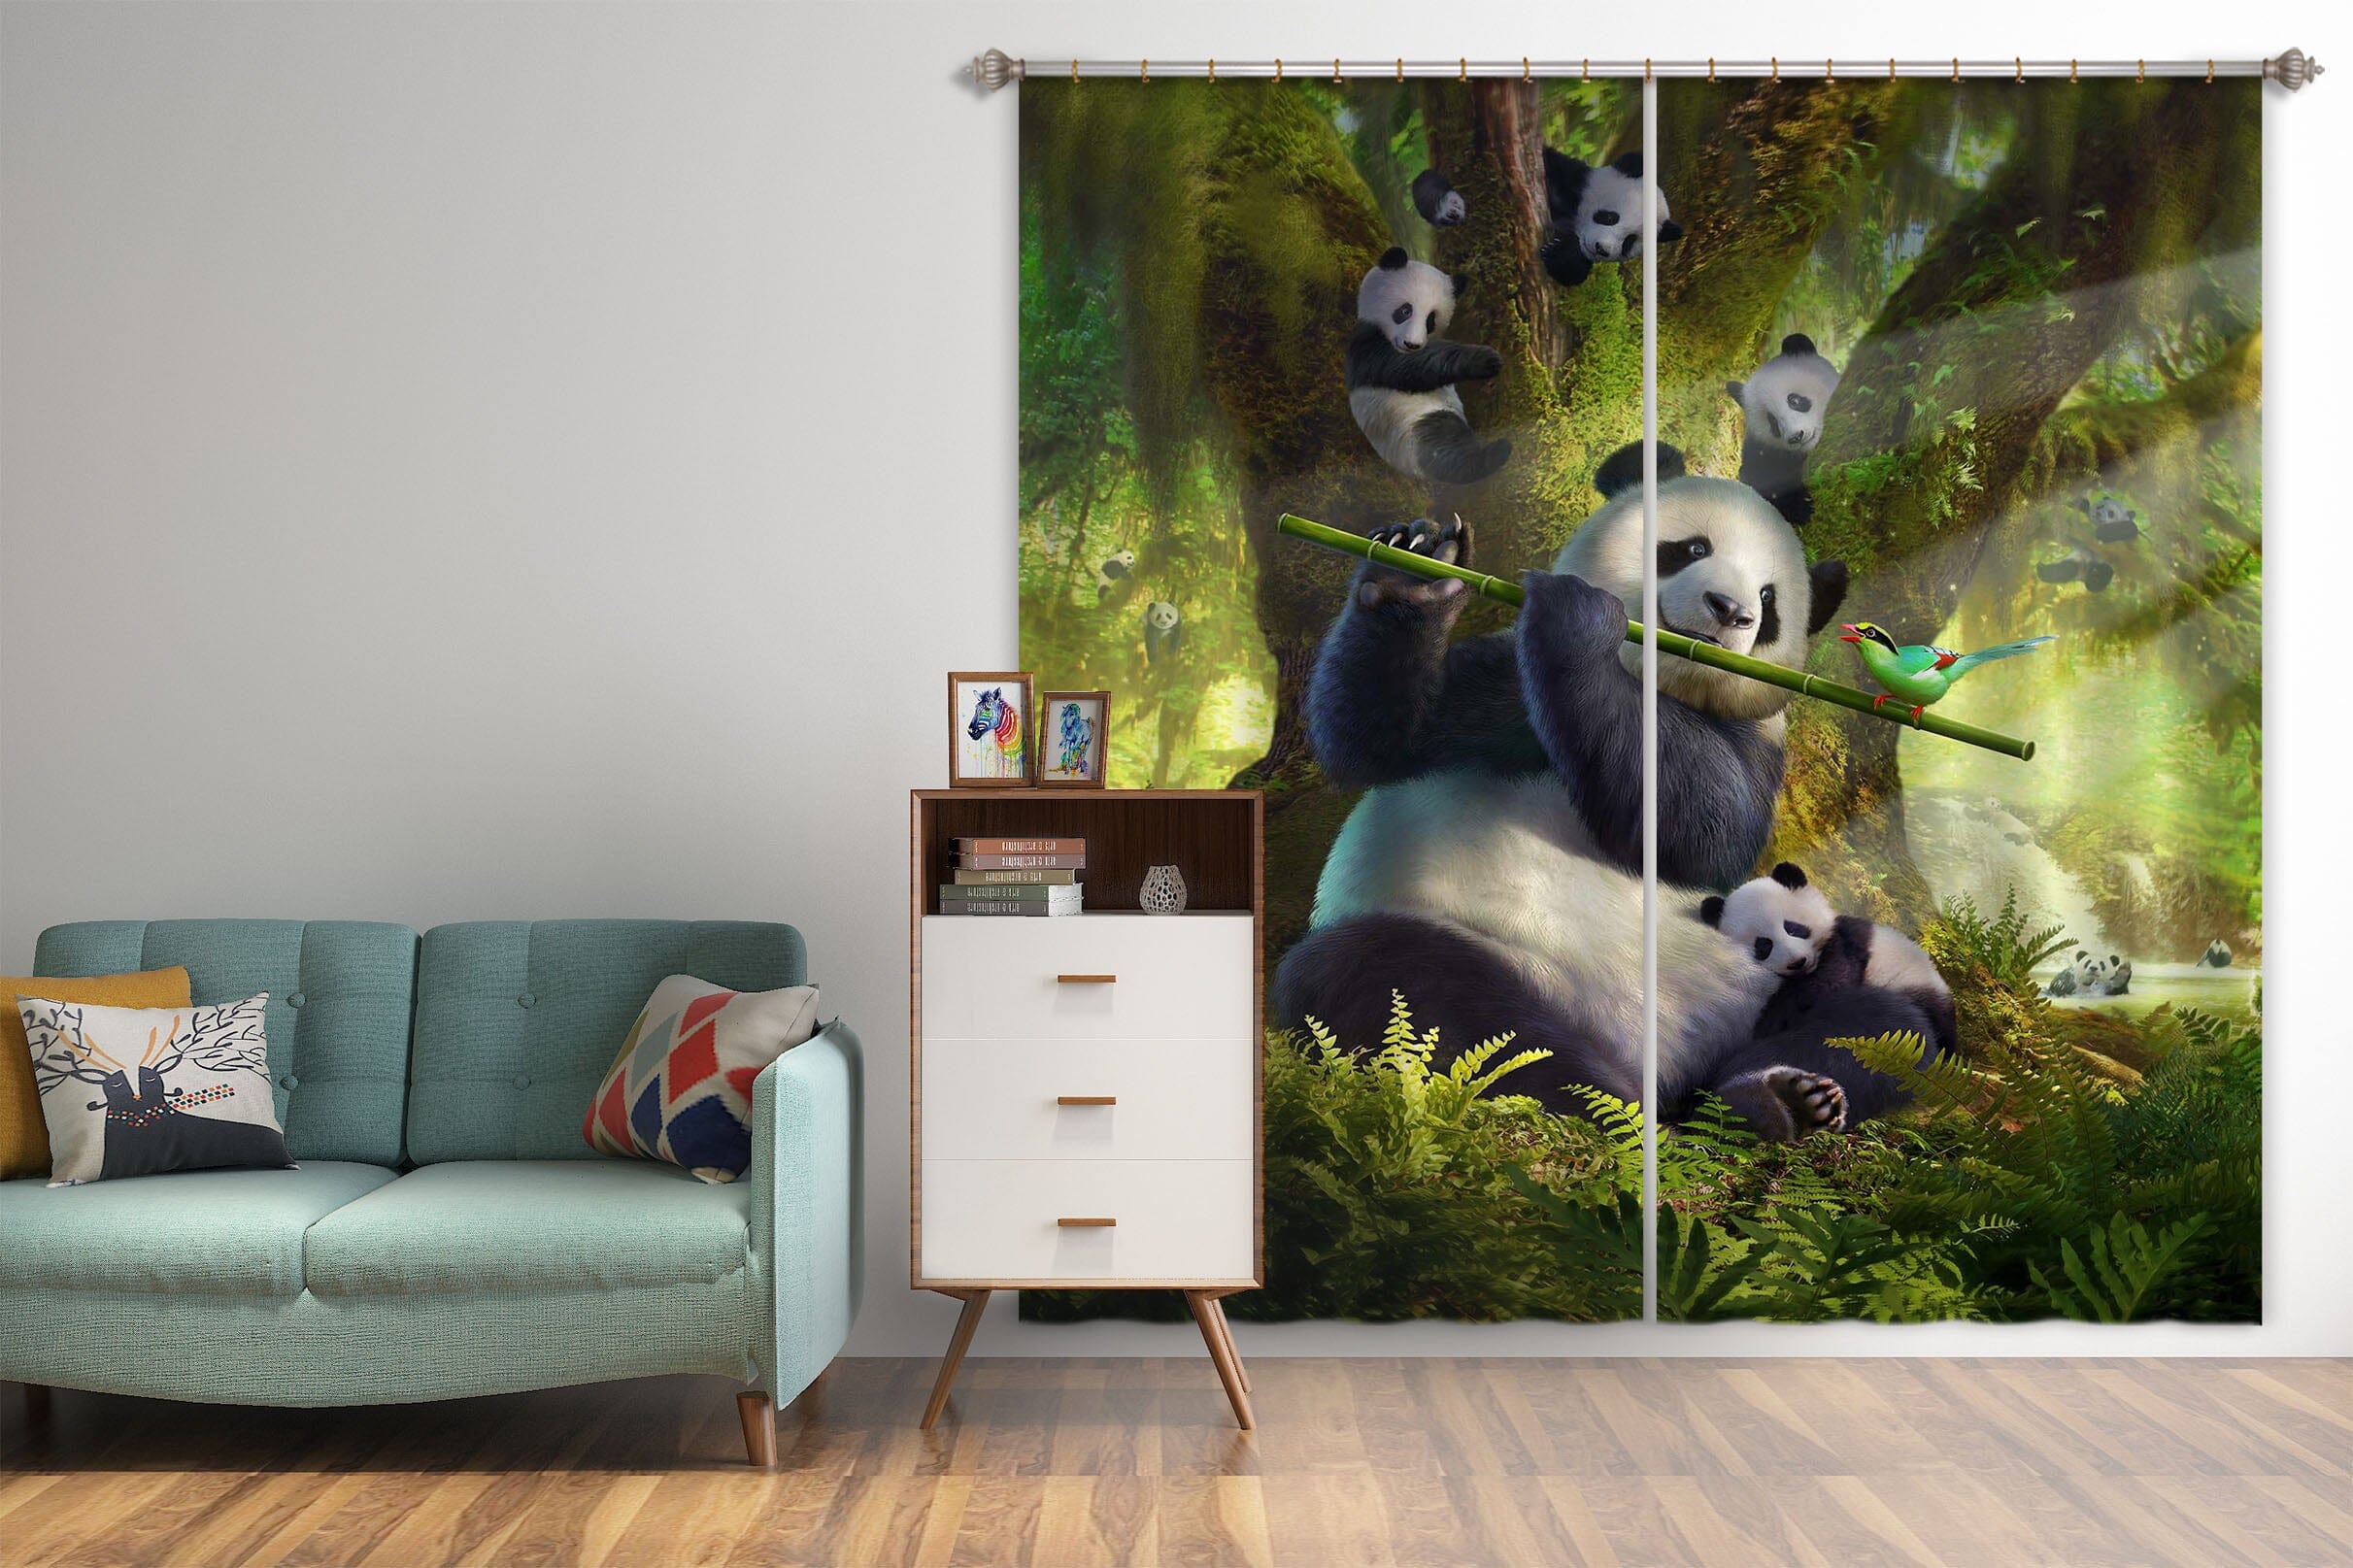 3D Panda Bear 045 Jerry LoFaro Curtain Curtains Drapes Curtains AJ Creativity Home 